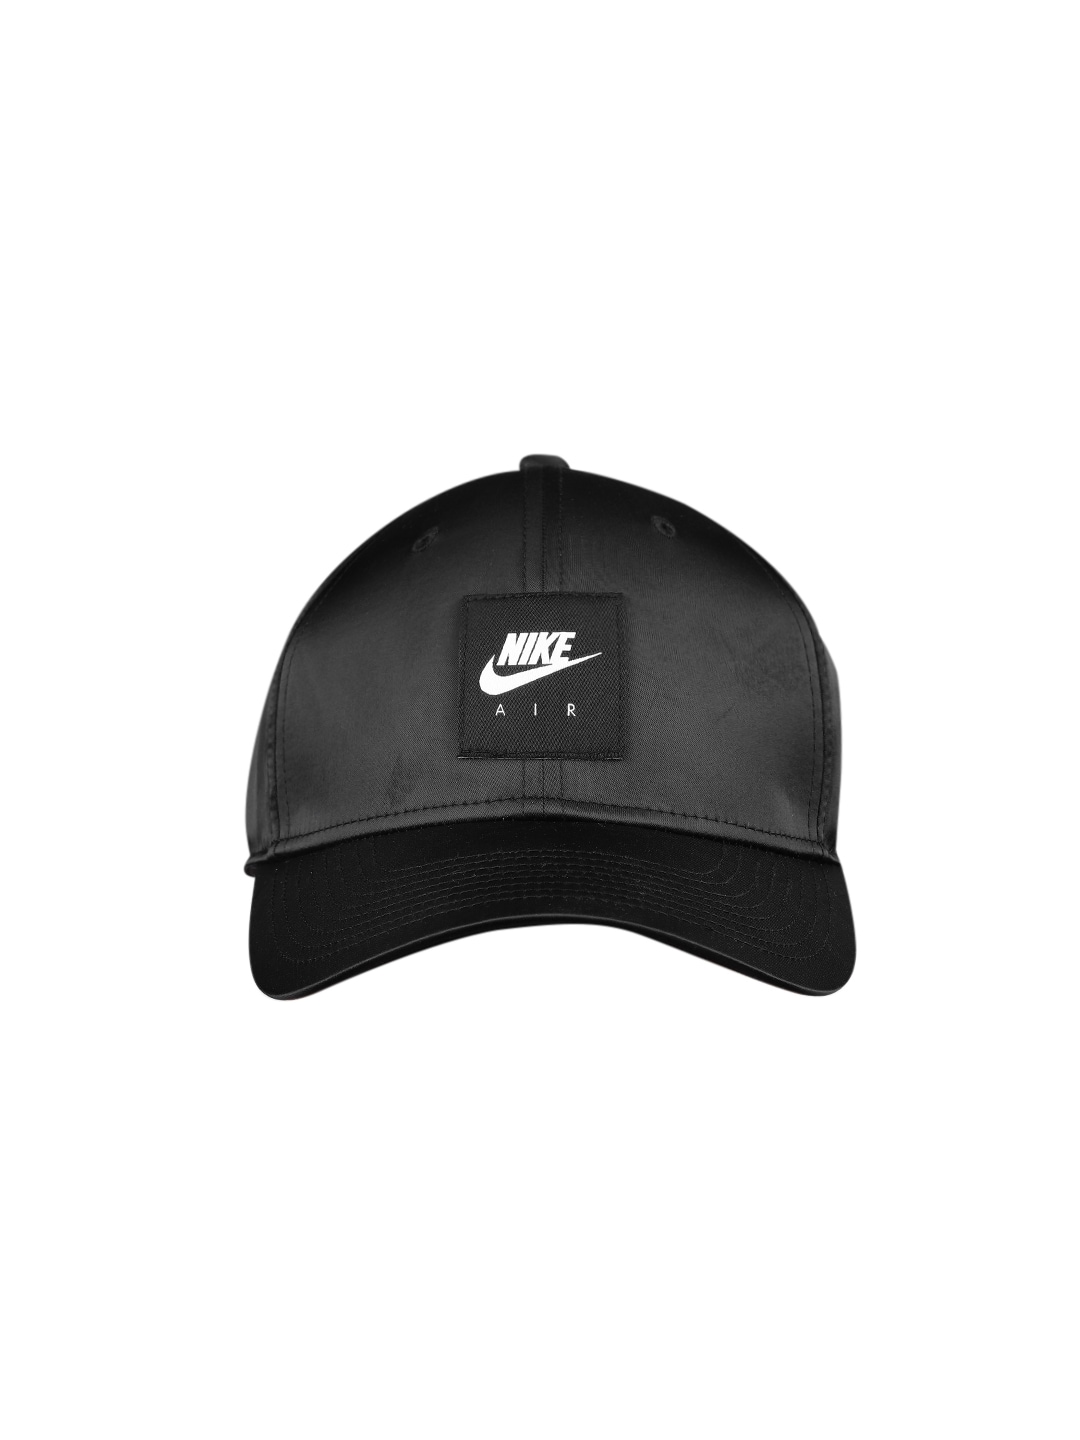 Nike Unisex Black Solid Snapback Cap Price in India